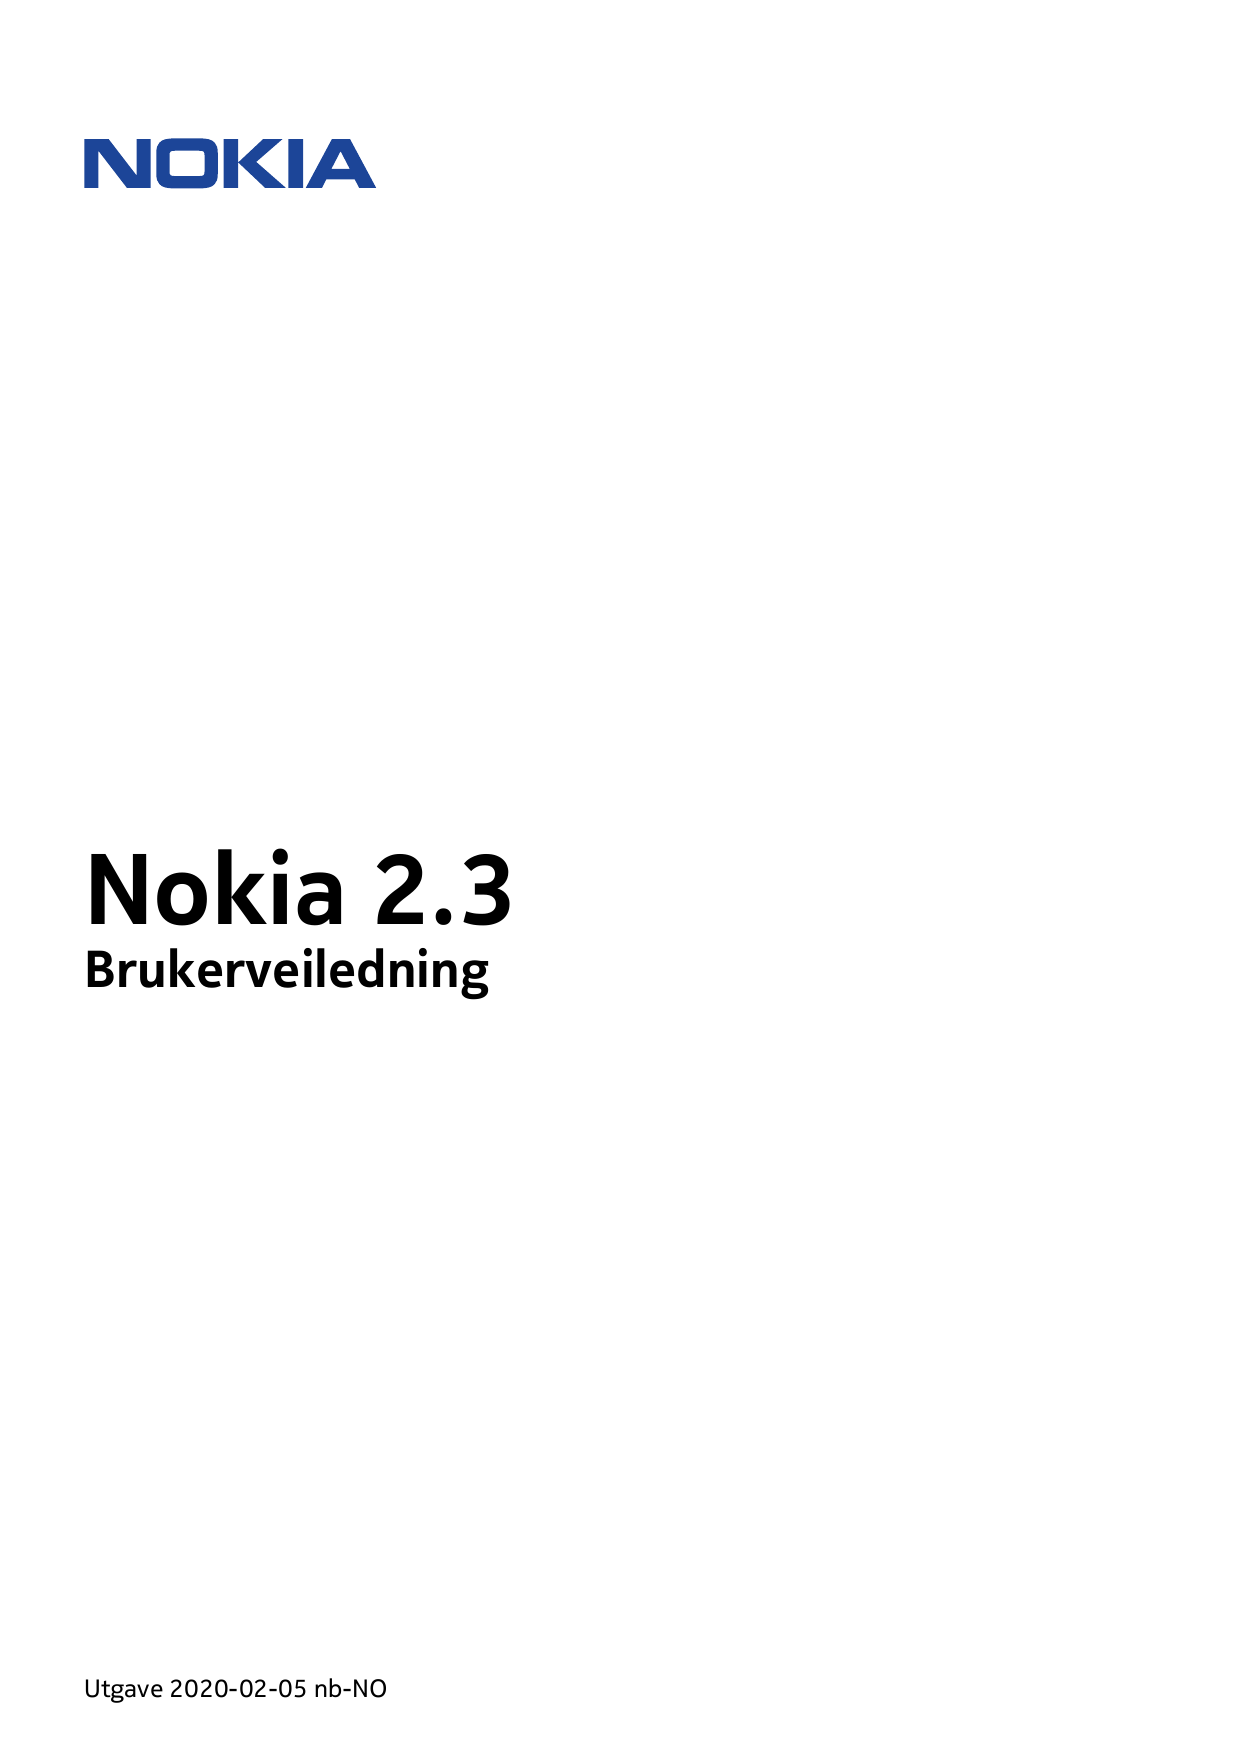 Nokia 2.3BrukerveiledningUtgave 2020-02-05 nb-NO